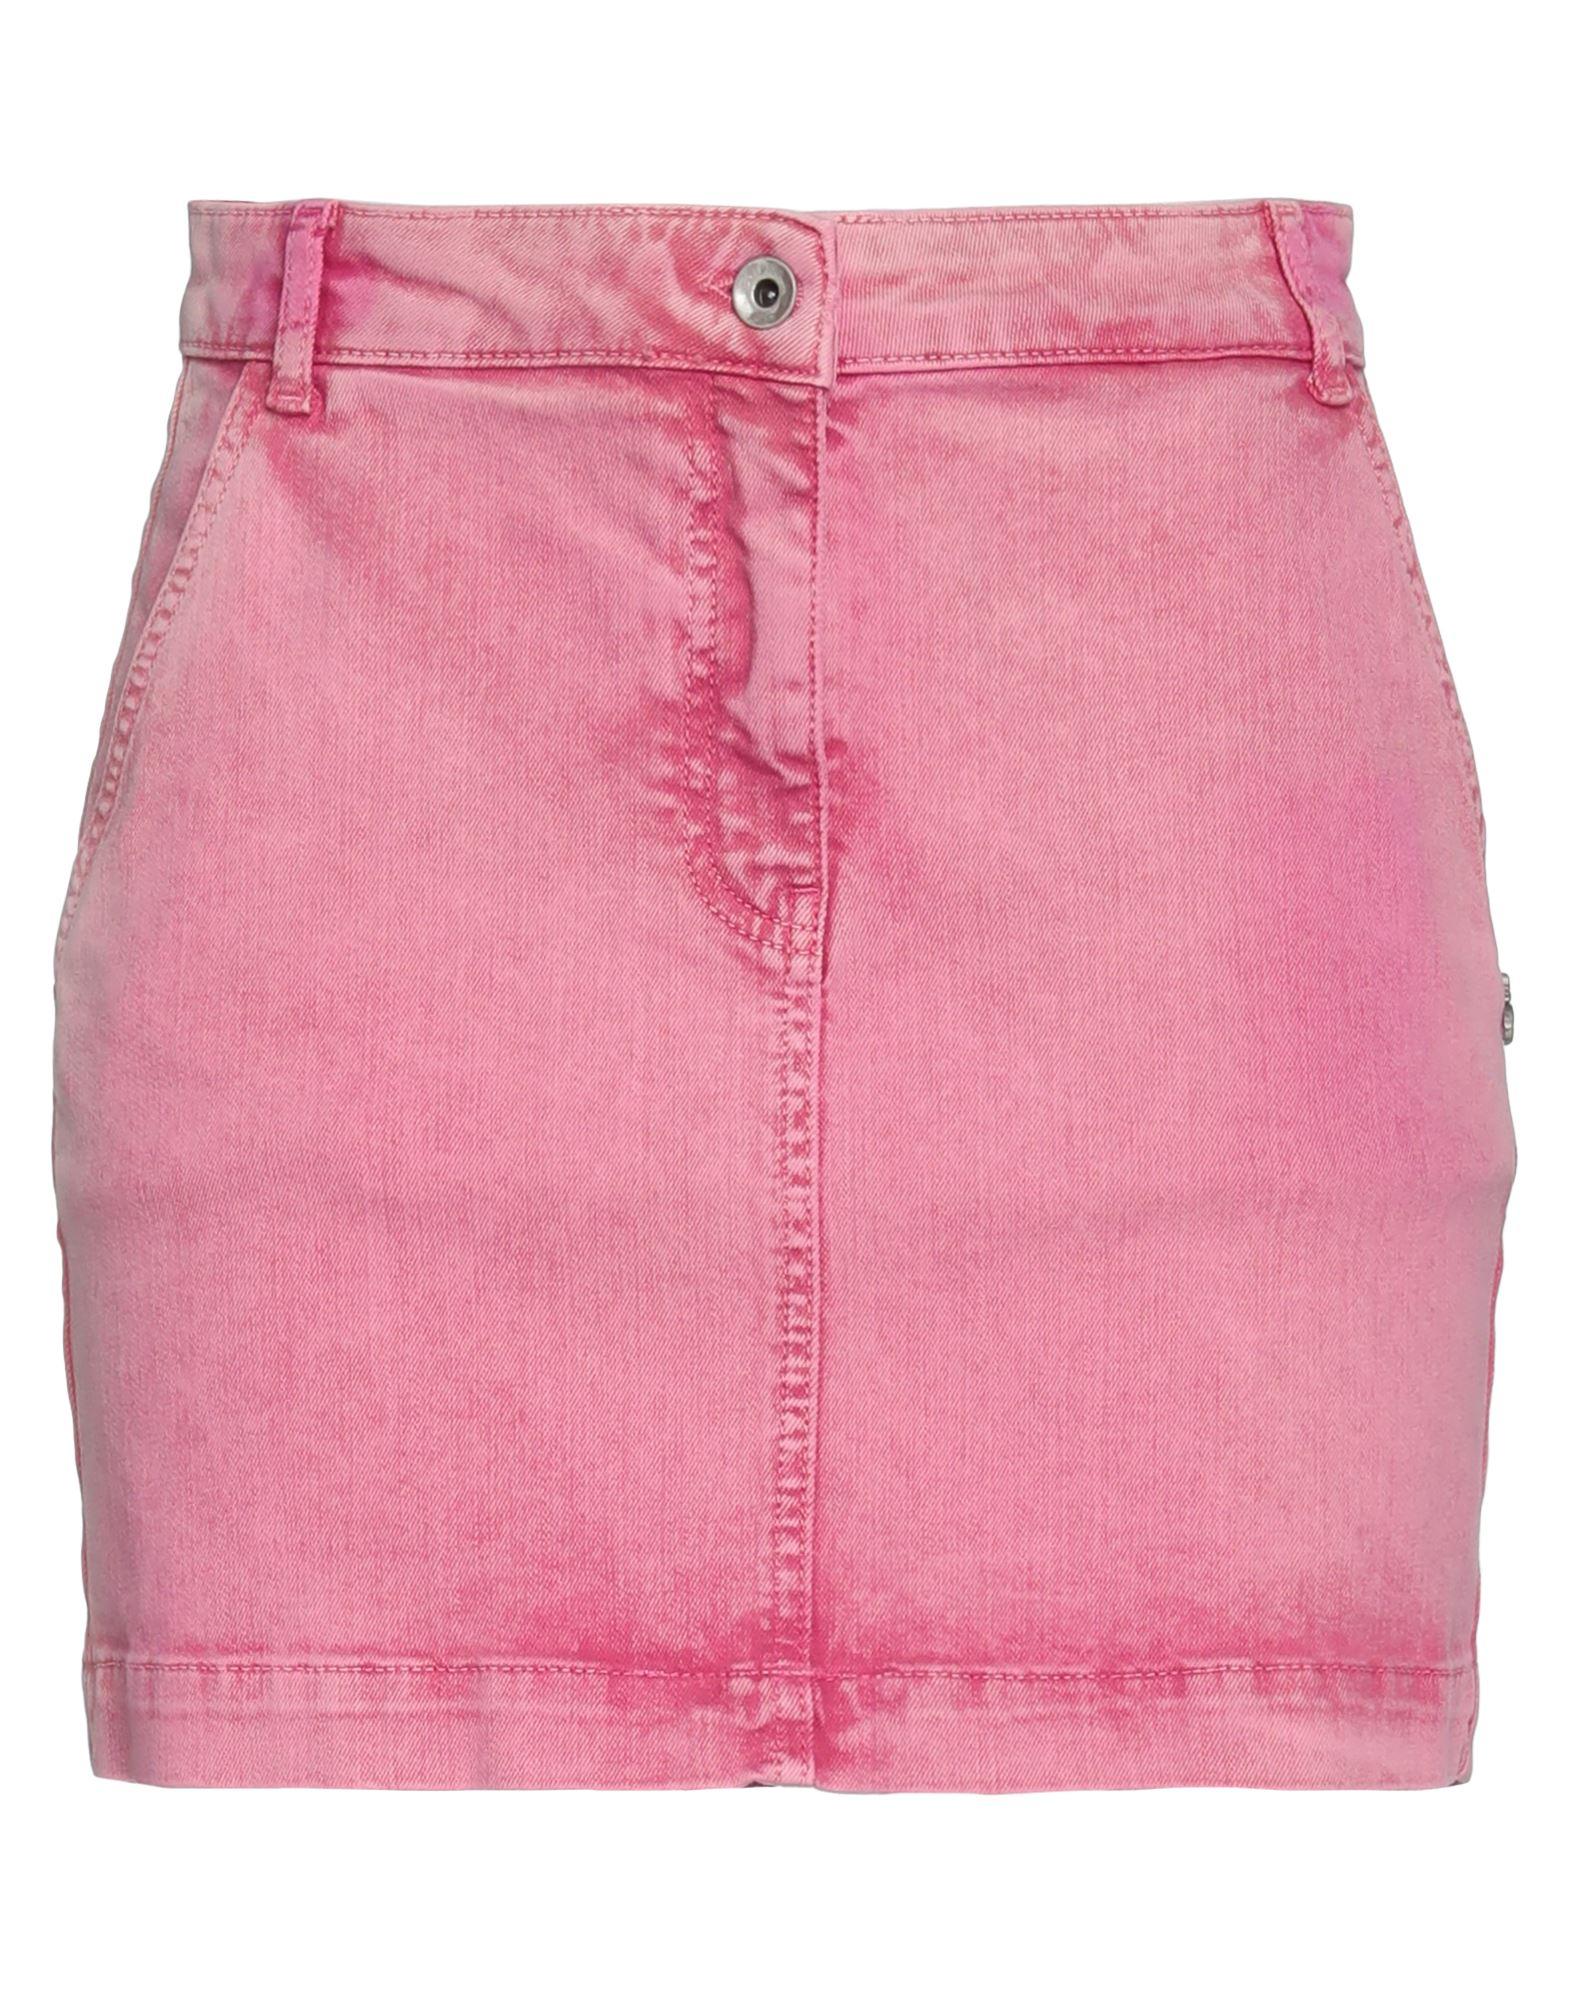 Patrizia Pepe Denim Skirt in Pink | Lyst